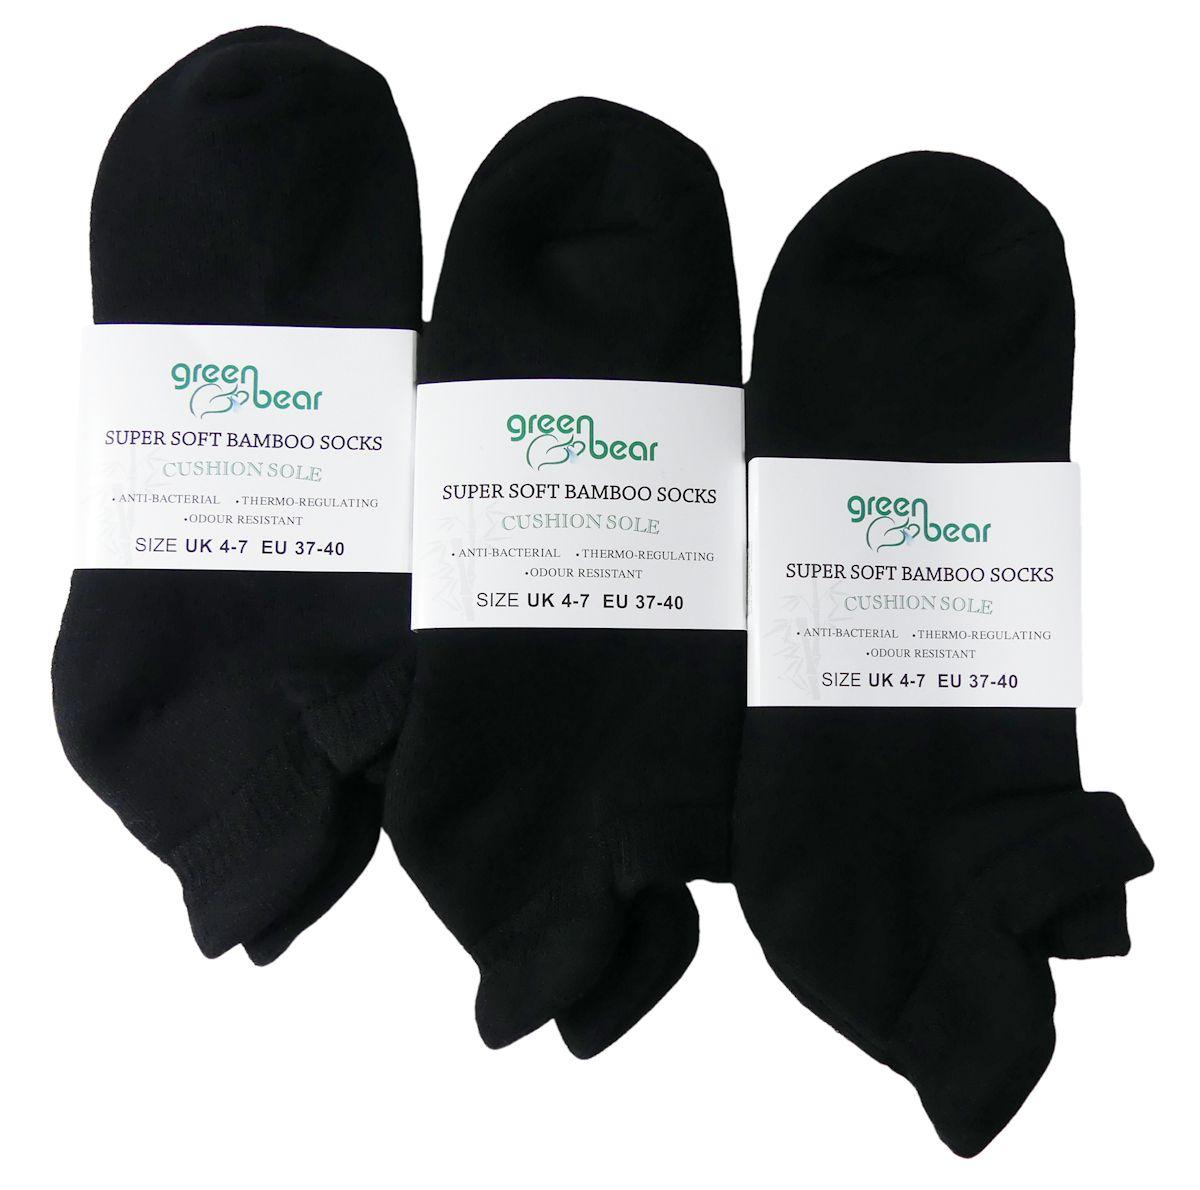 White and Green Bear Logo - Ladies/Men's Unisex Bamboo Trainer ankle socks - Sports (3 pack ...